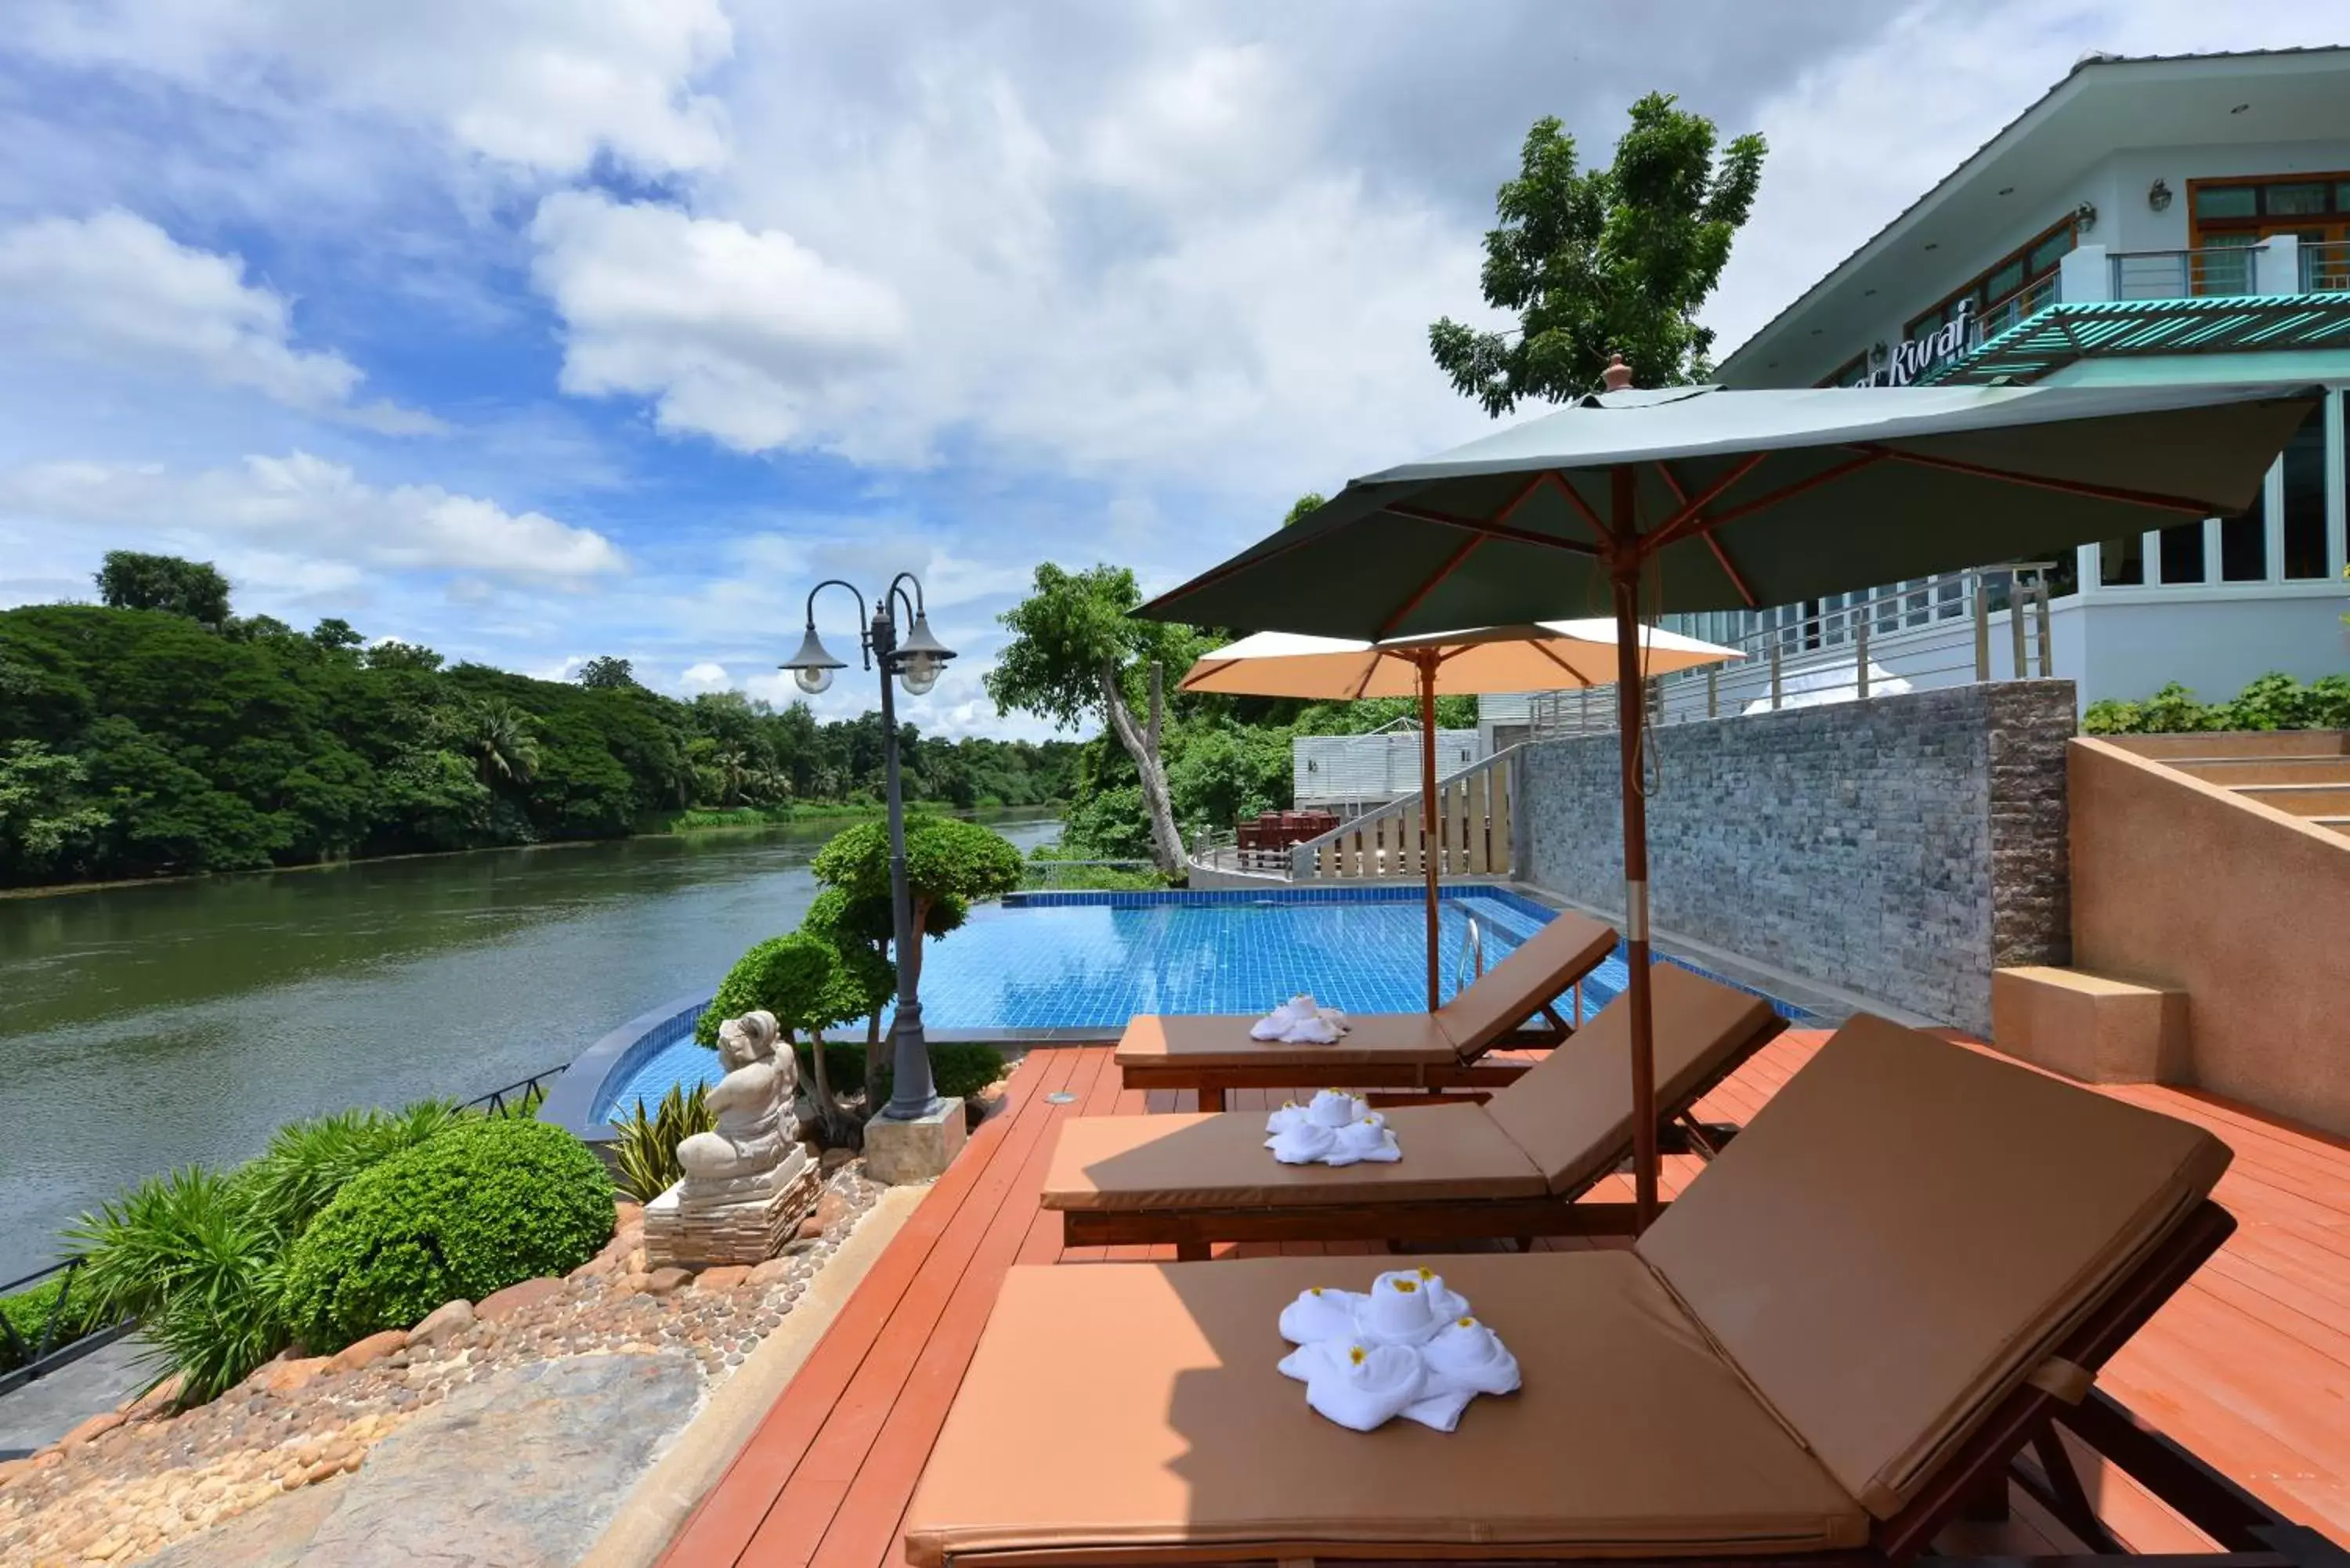 Swimming pool in Princess River Kwai Hotel